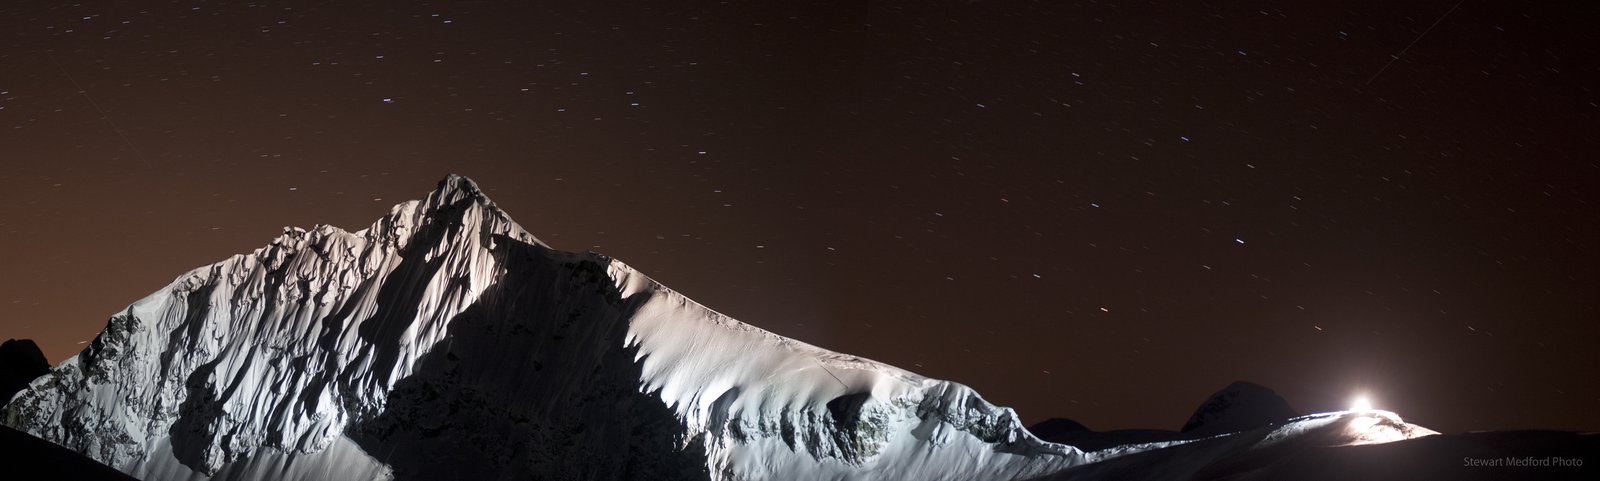 Tricouni Peak At Night